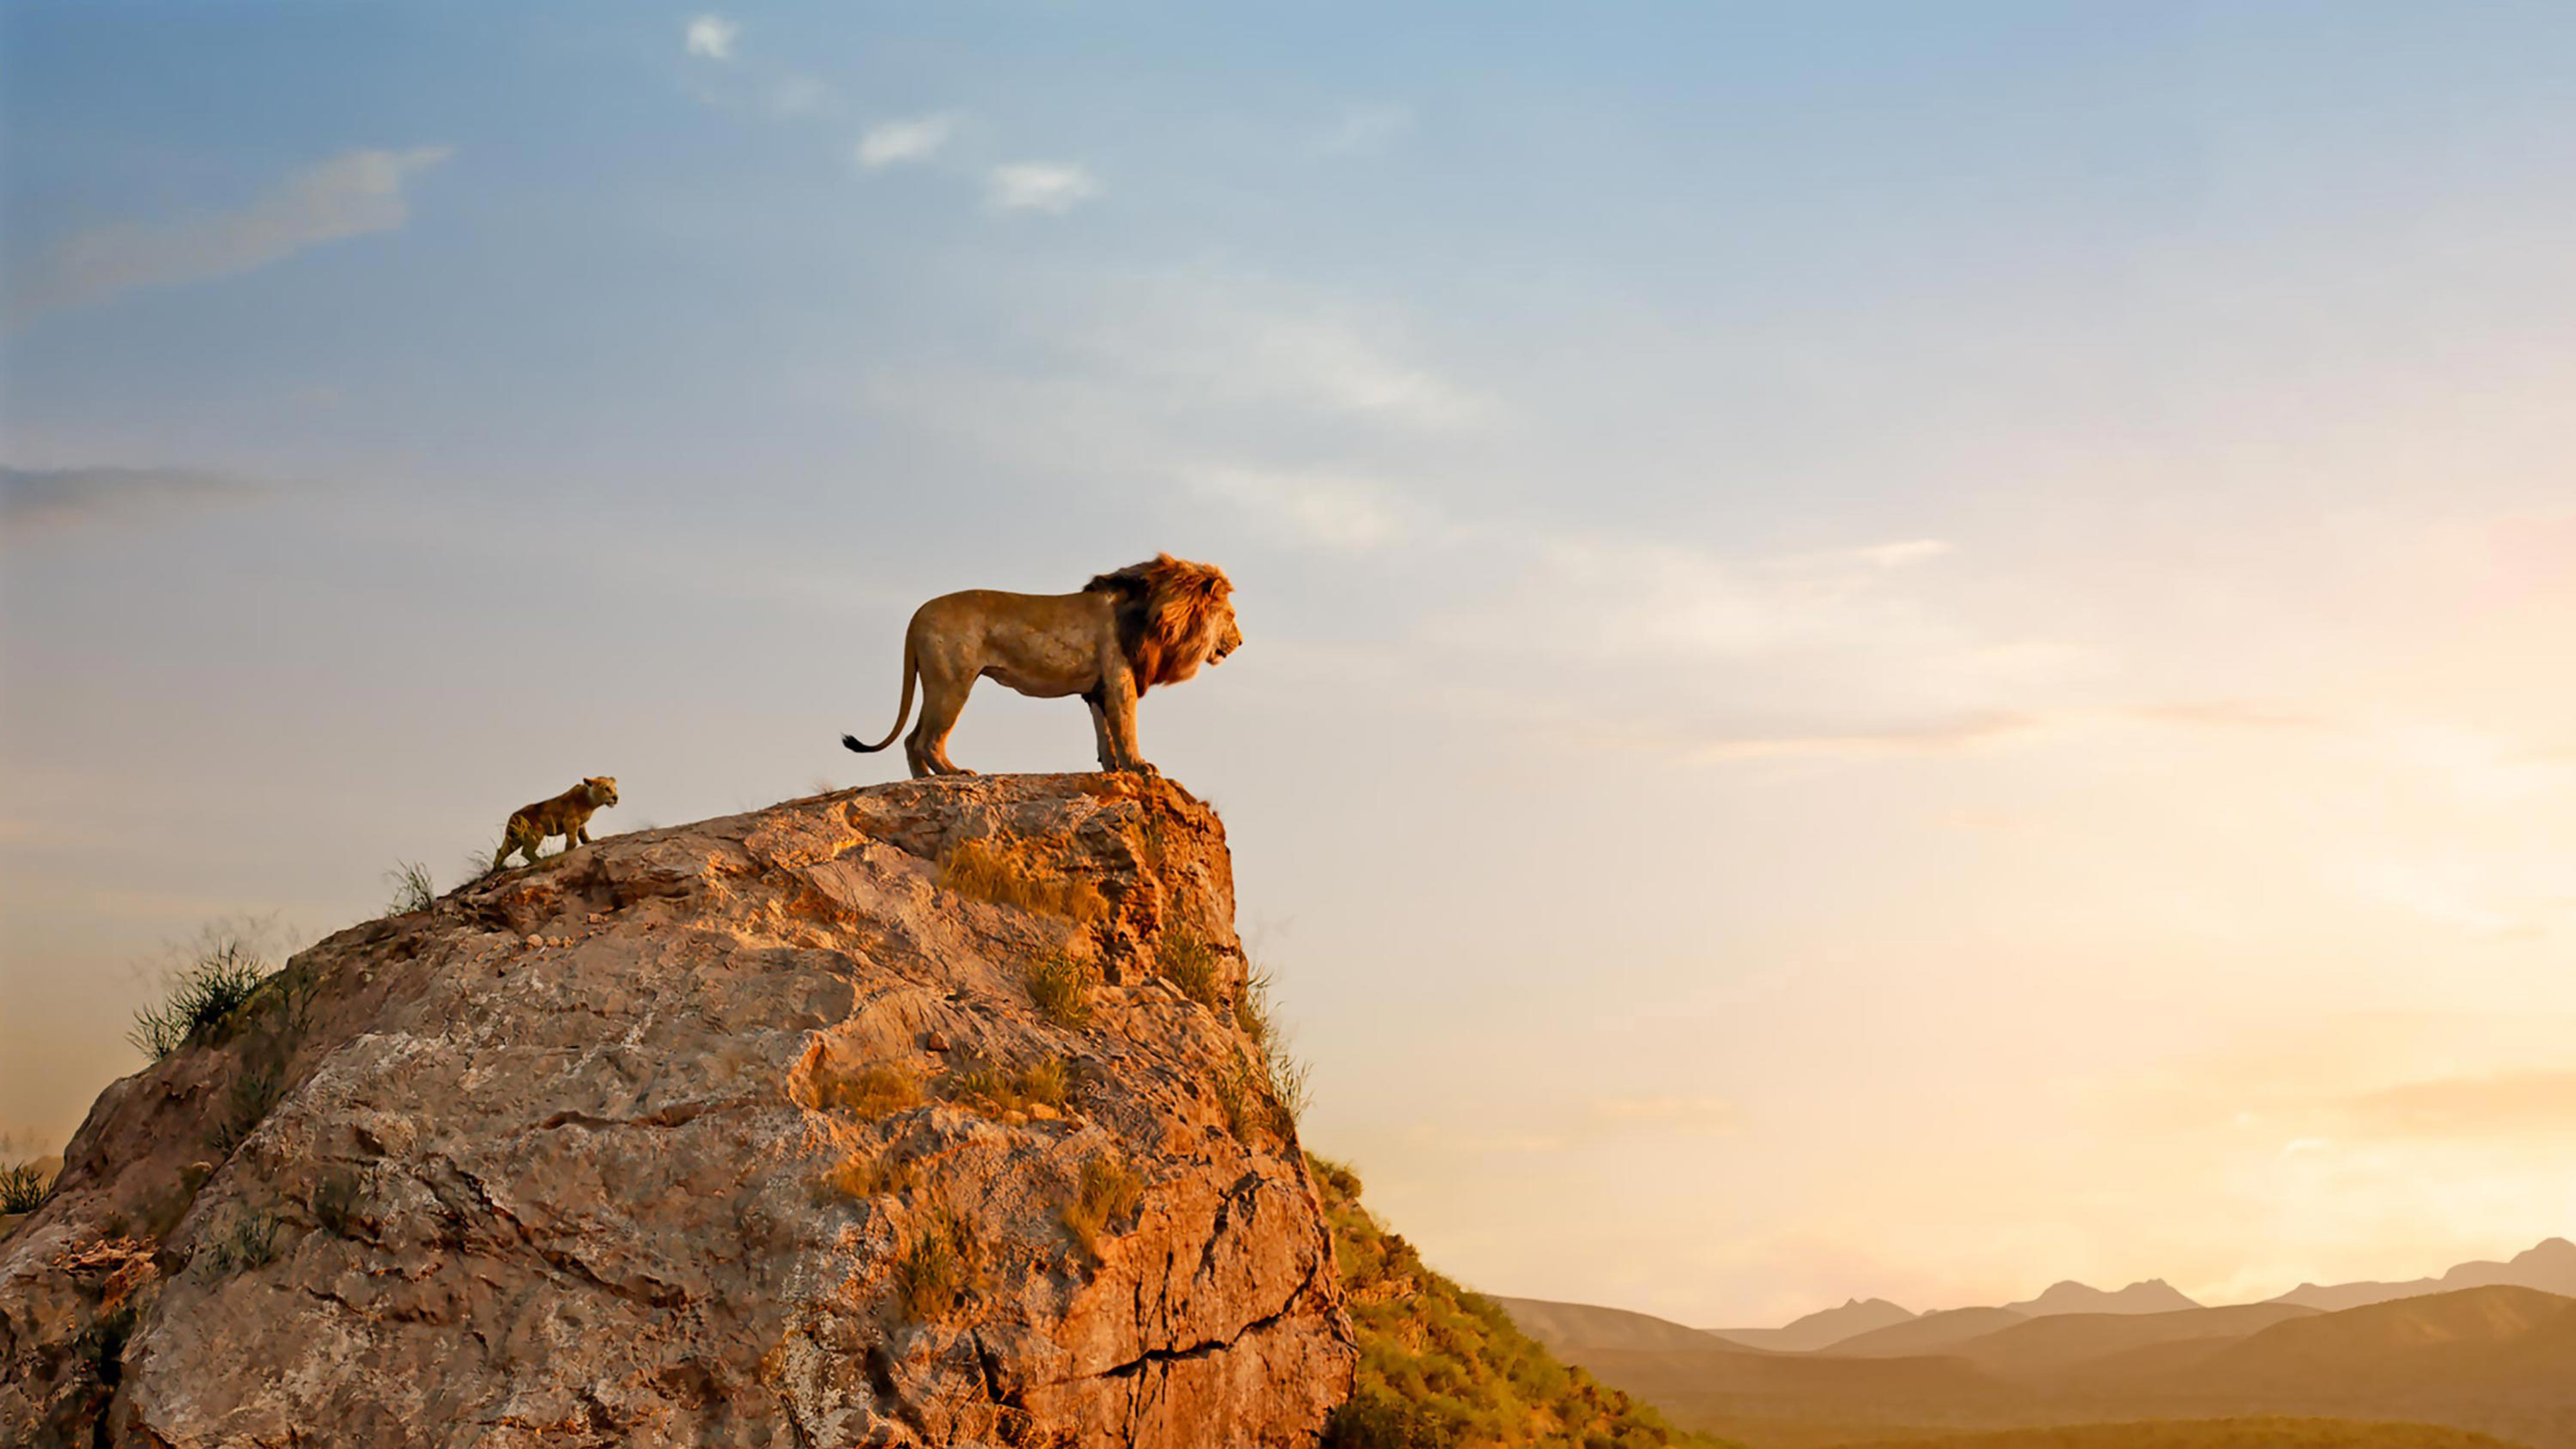 The Lion King 2019, Powerful Mufasa, Simba's 4K wallpaper, Iconic scene, 3840x2160 4K Desktop